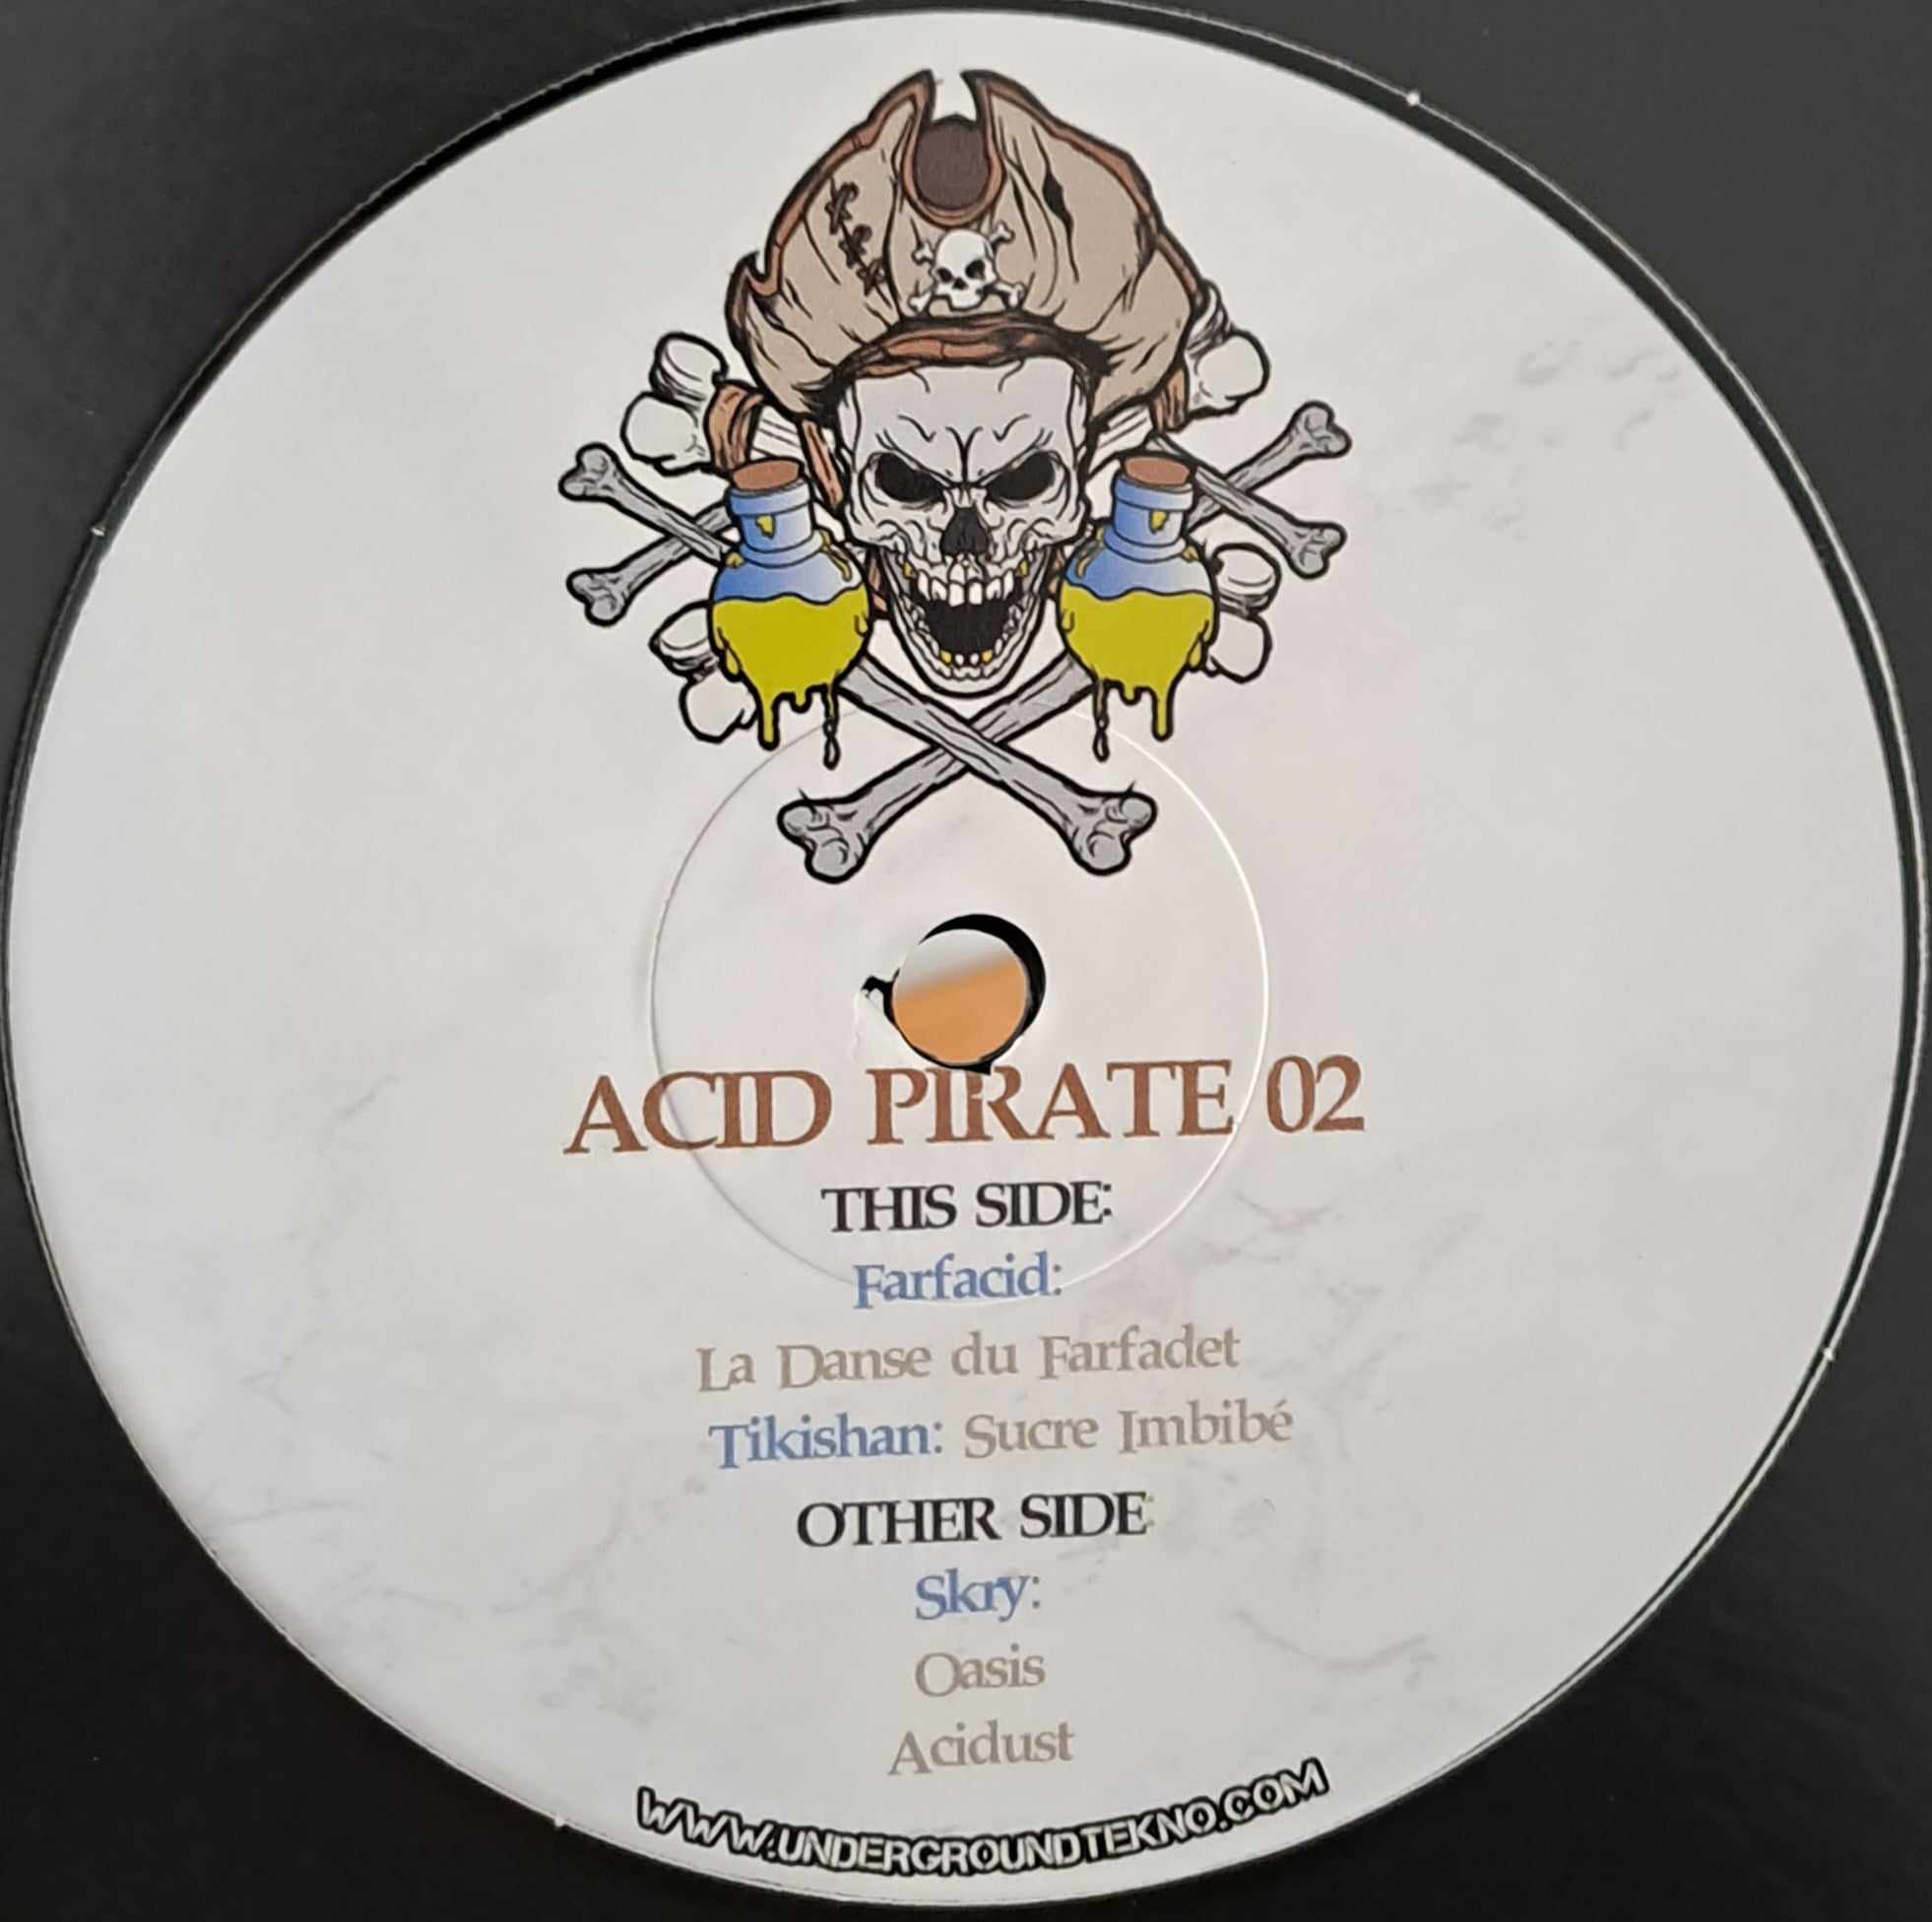 Acid Pirate 02 (RP2023) - vinyle acid